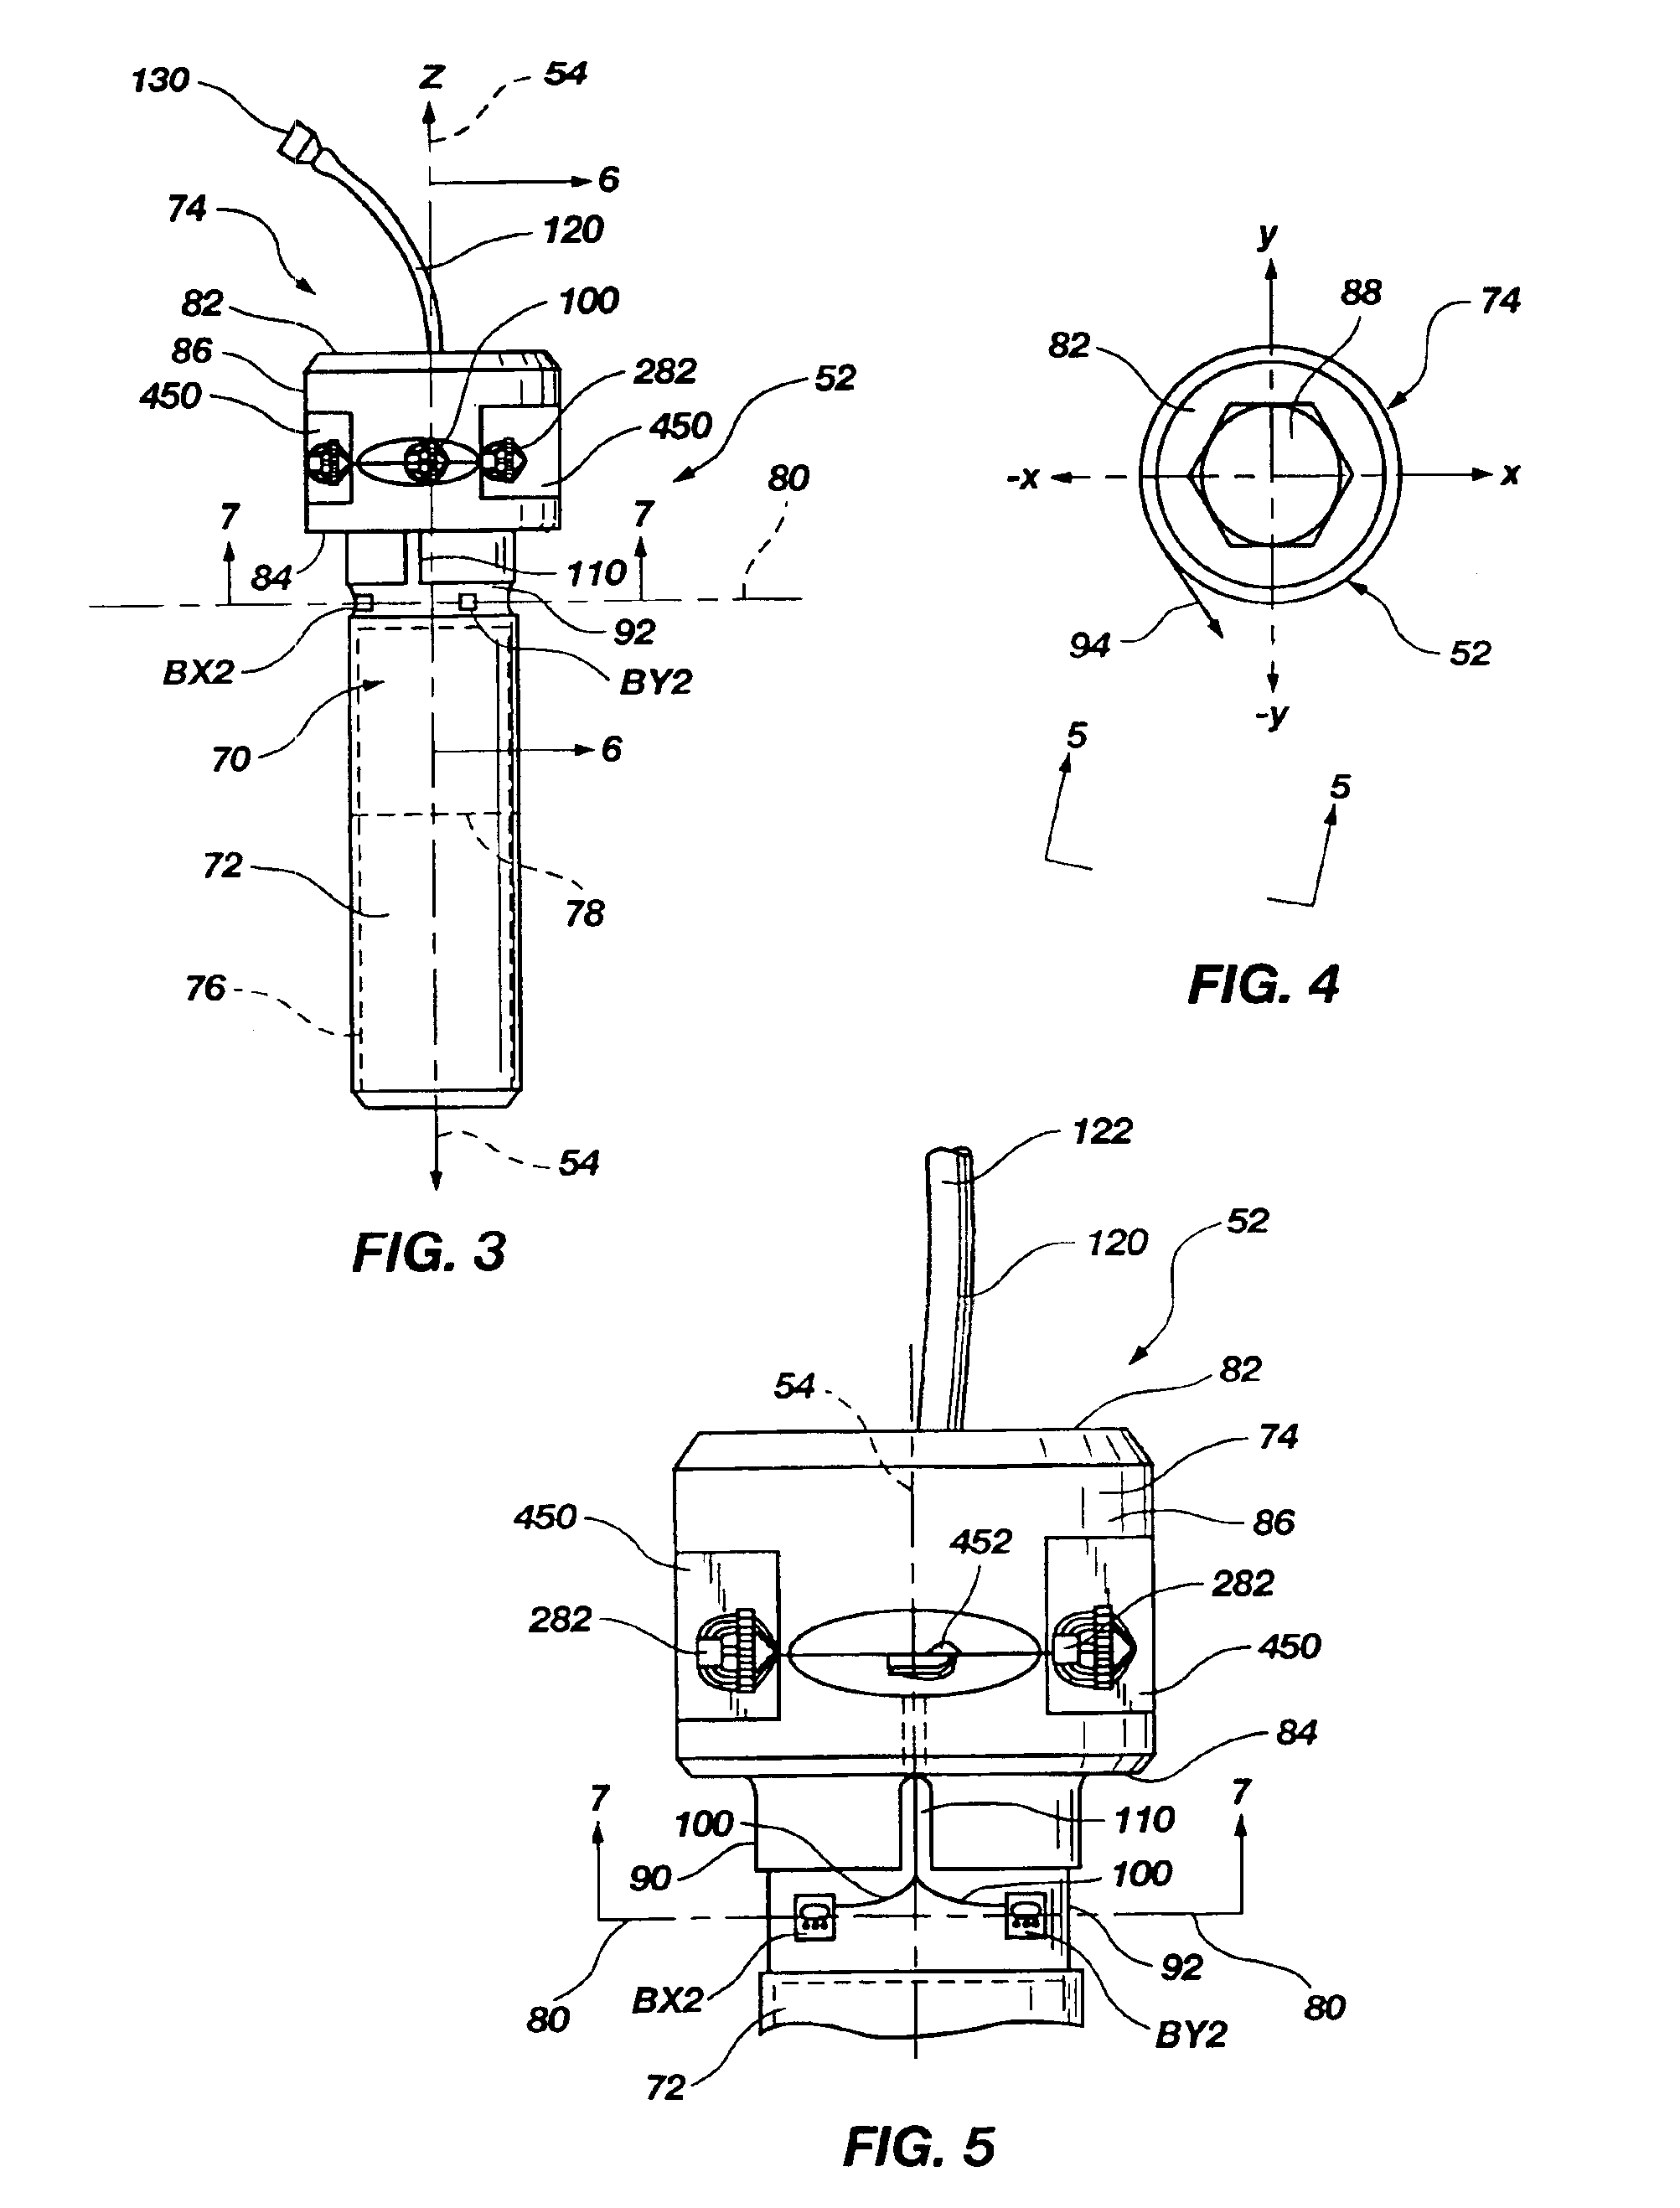 Method and apparatus for measuring bending in a pin member